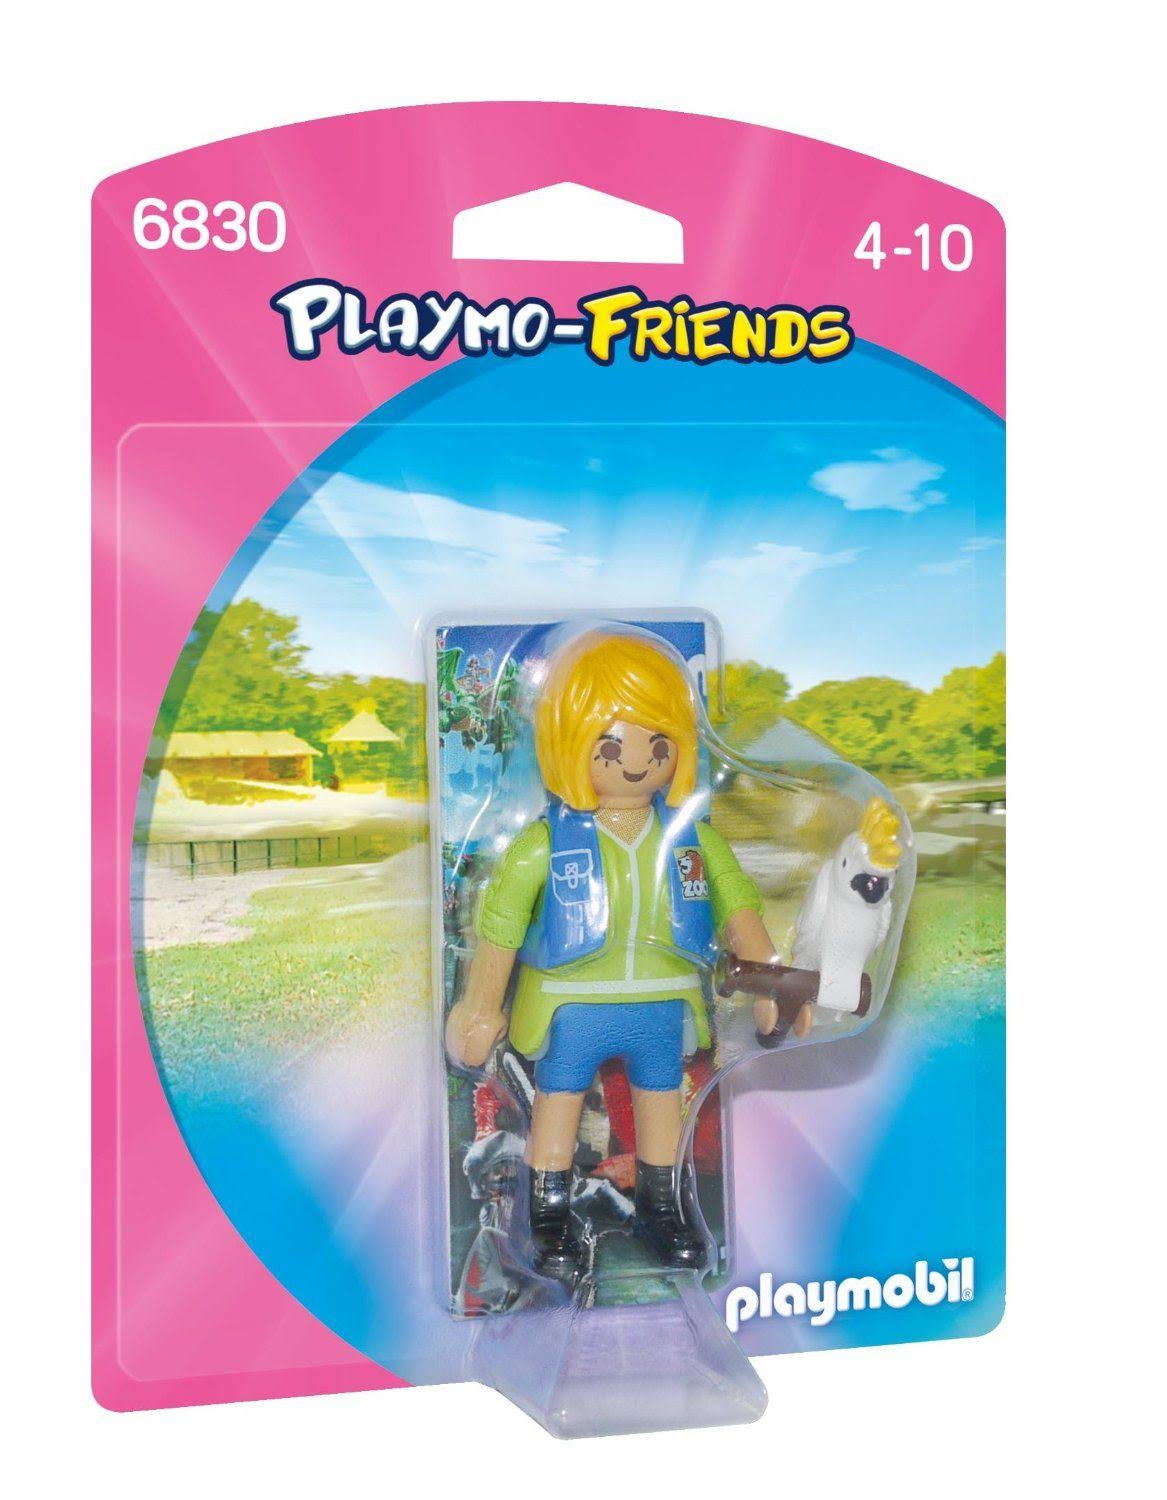 Playmobil Playmo Friends Animal Trainer Figure with Cockatoo